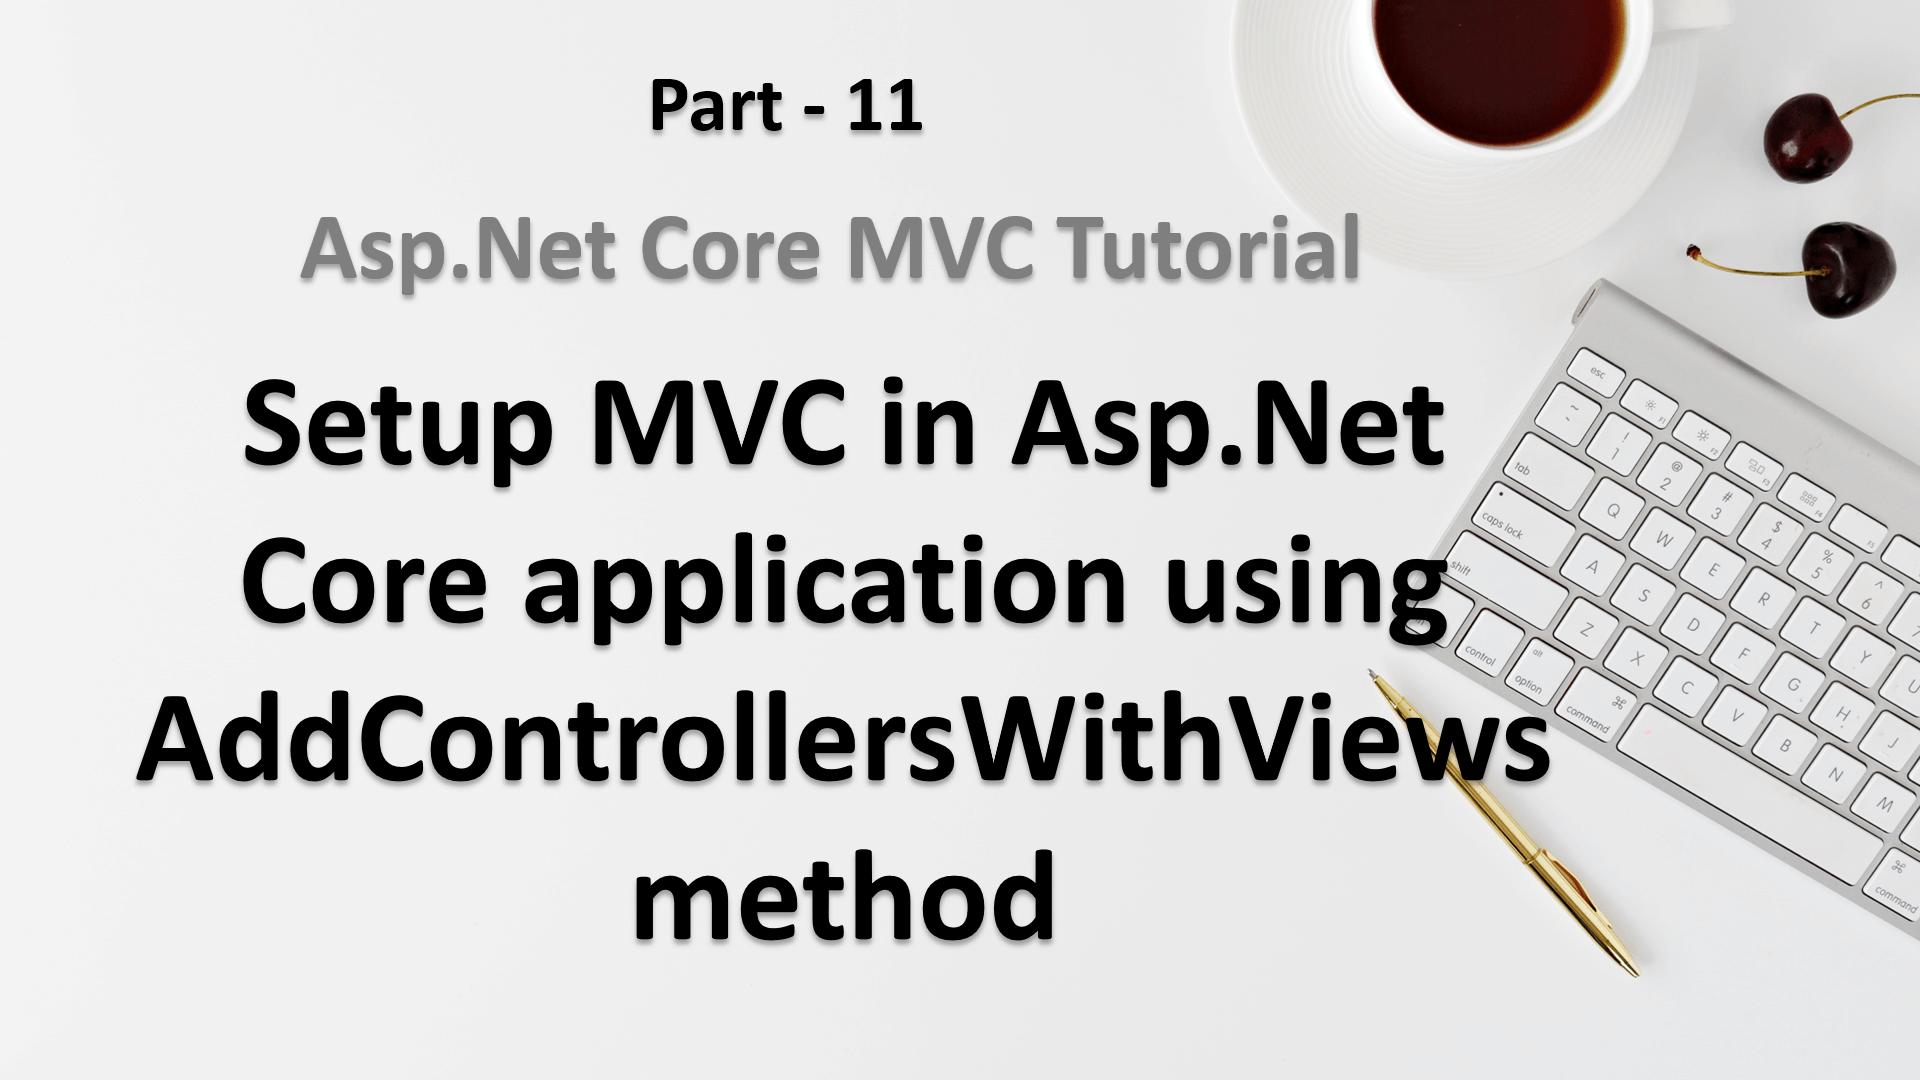 Setup MVC in Asp.Net Core application using AddControllersWithViews method